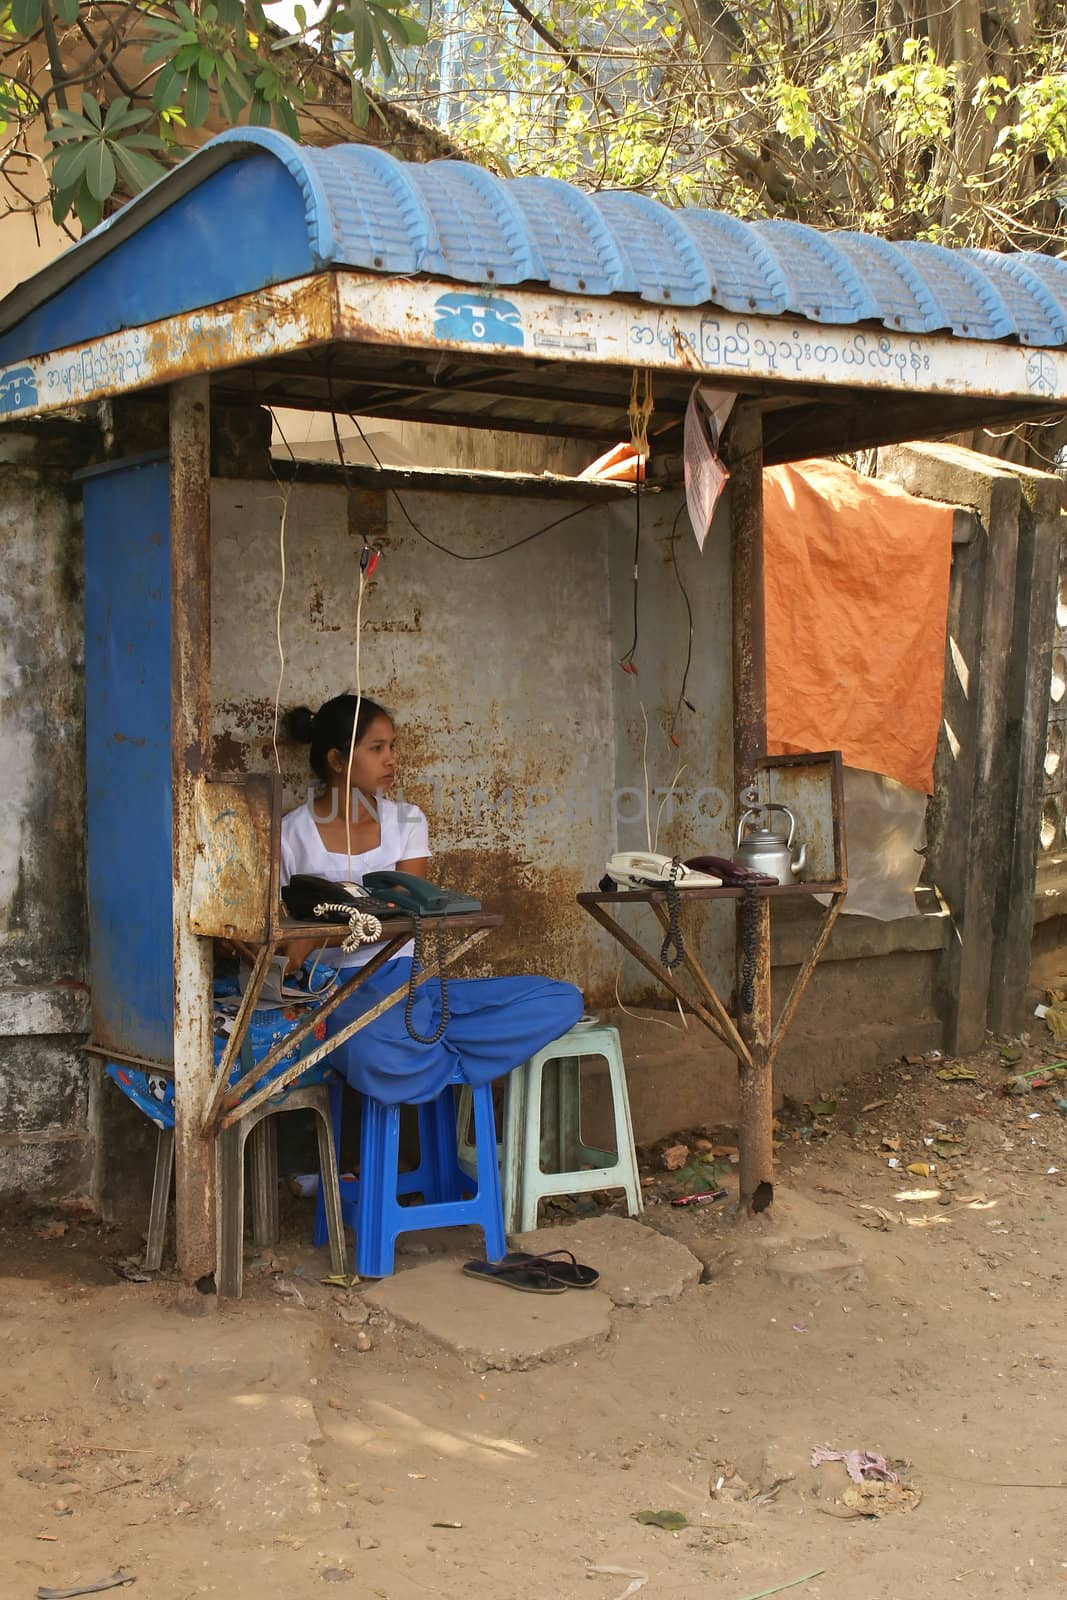 Typical callbox in Myanmar. Photo was taken in Yangon.